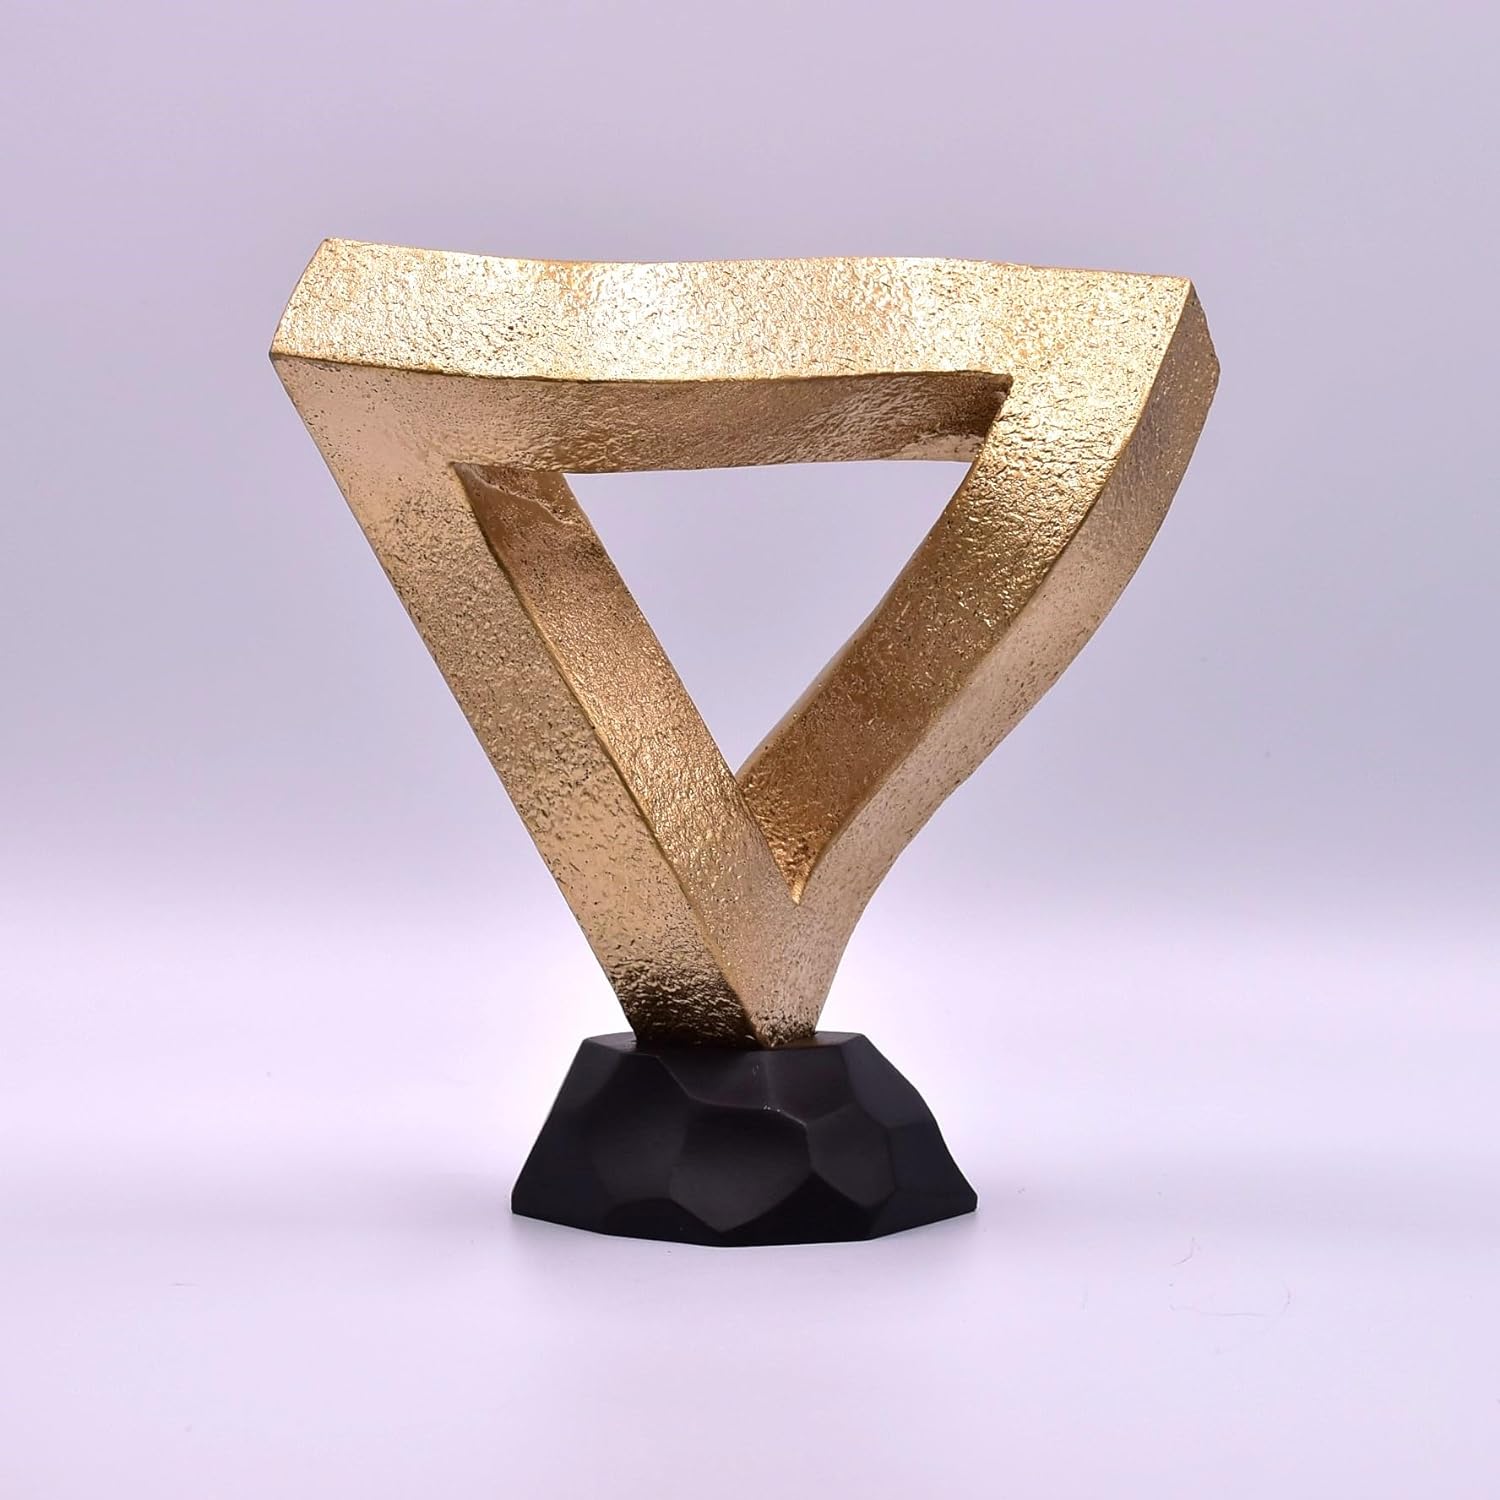 Penrose Triangle Sculpture - Optical Illusion - Impossible Triangle Art